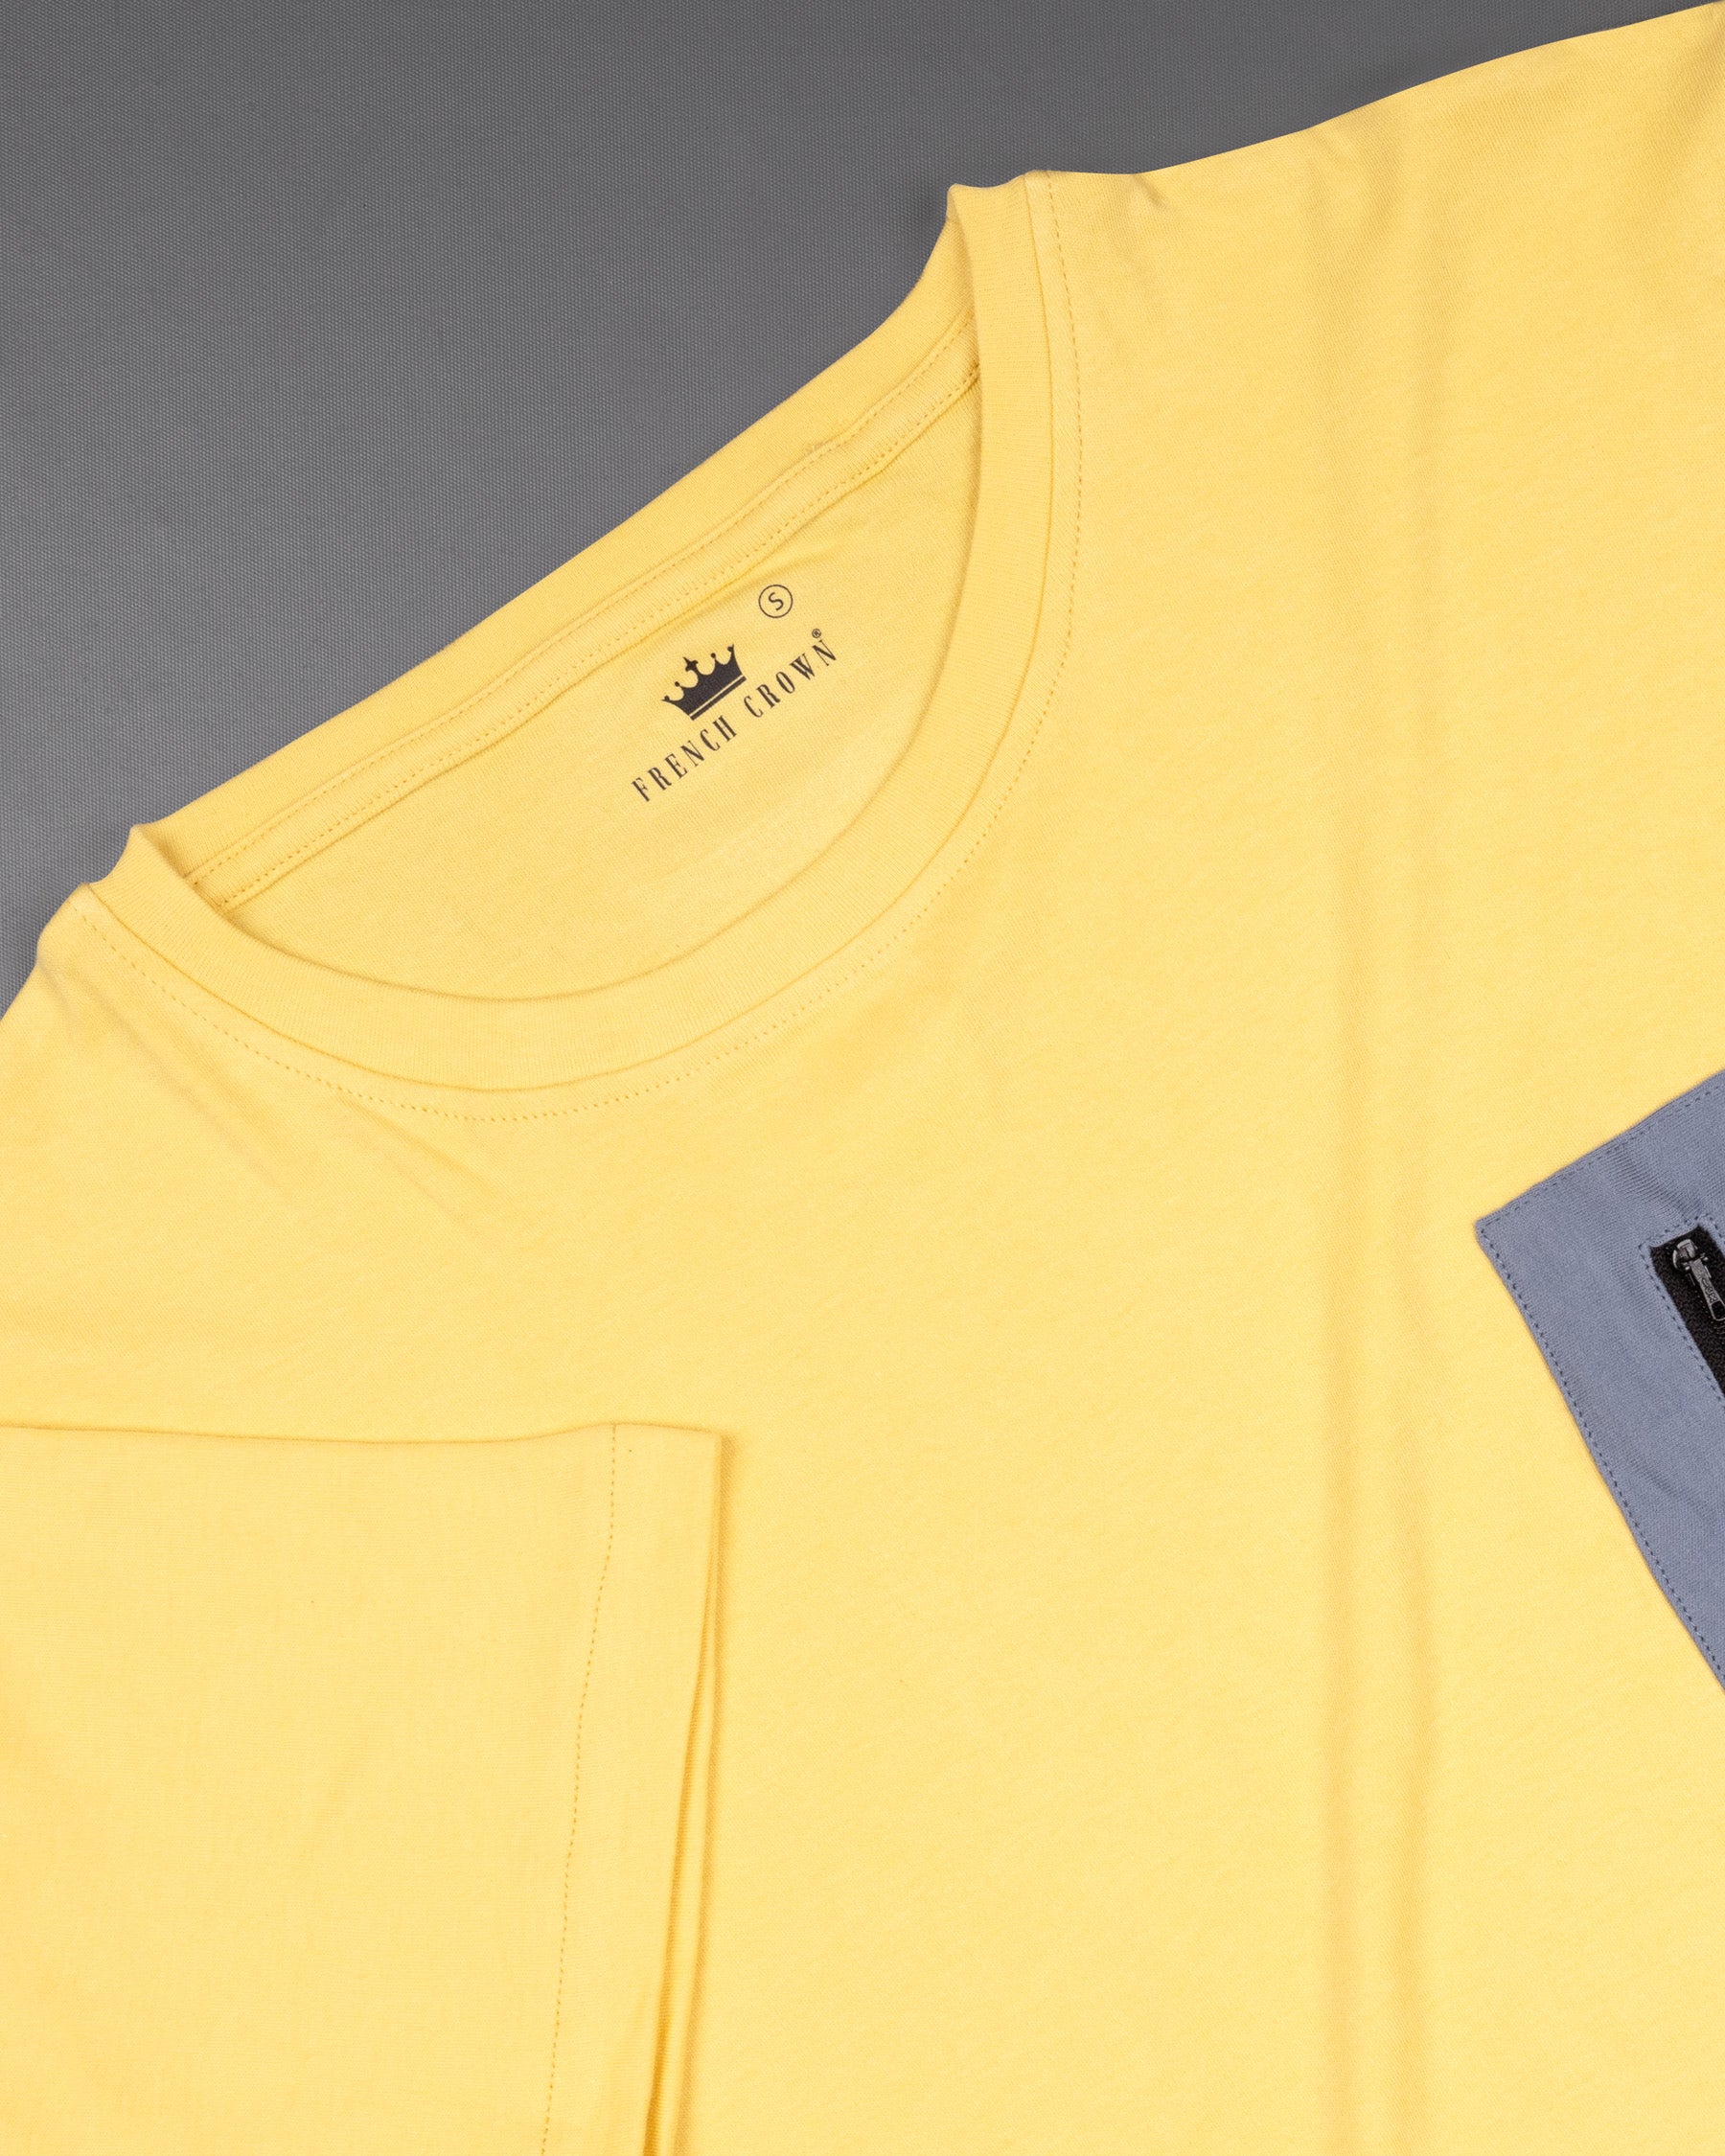 Sweet Corn Yellow with zipper pocket heavyweight premium cotton winter T-shirt TS427-S, TS427-M, TS427-L, TS427-XL, TS427-XXL, TS427-3XL, TS427-4XL